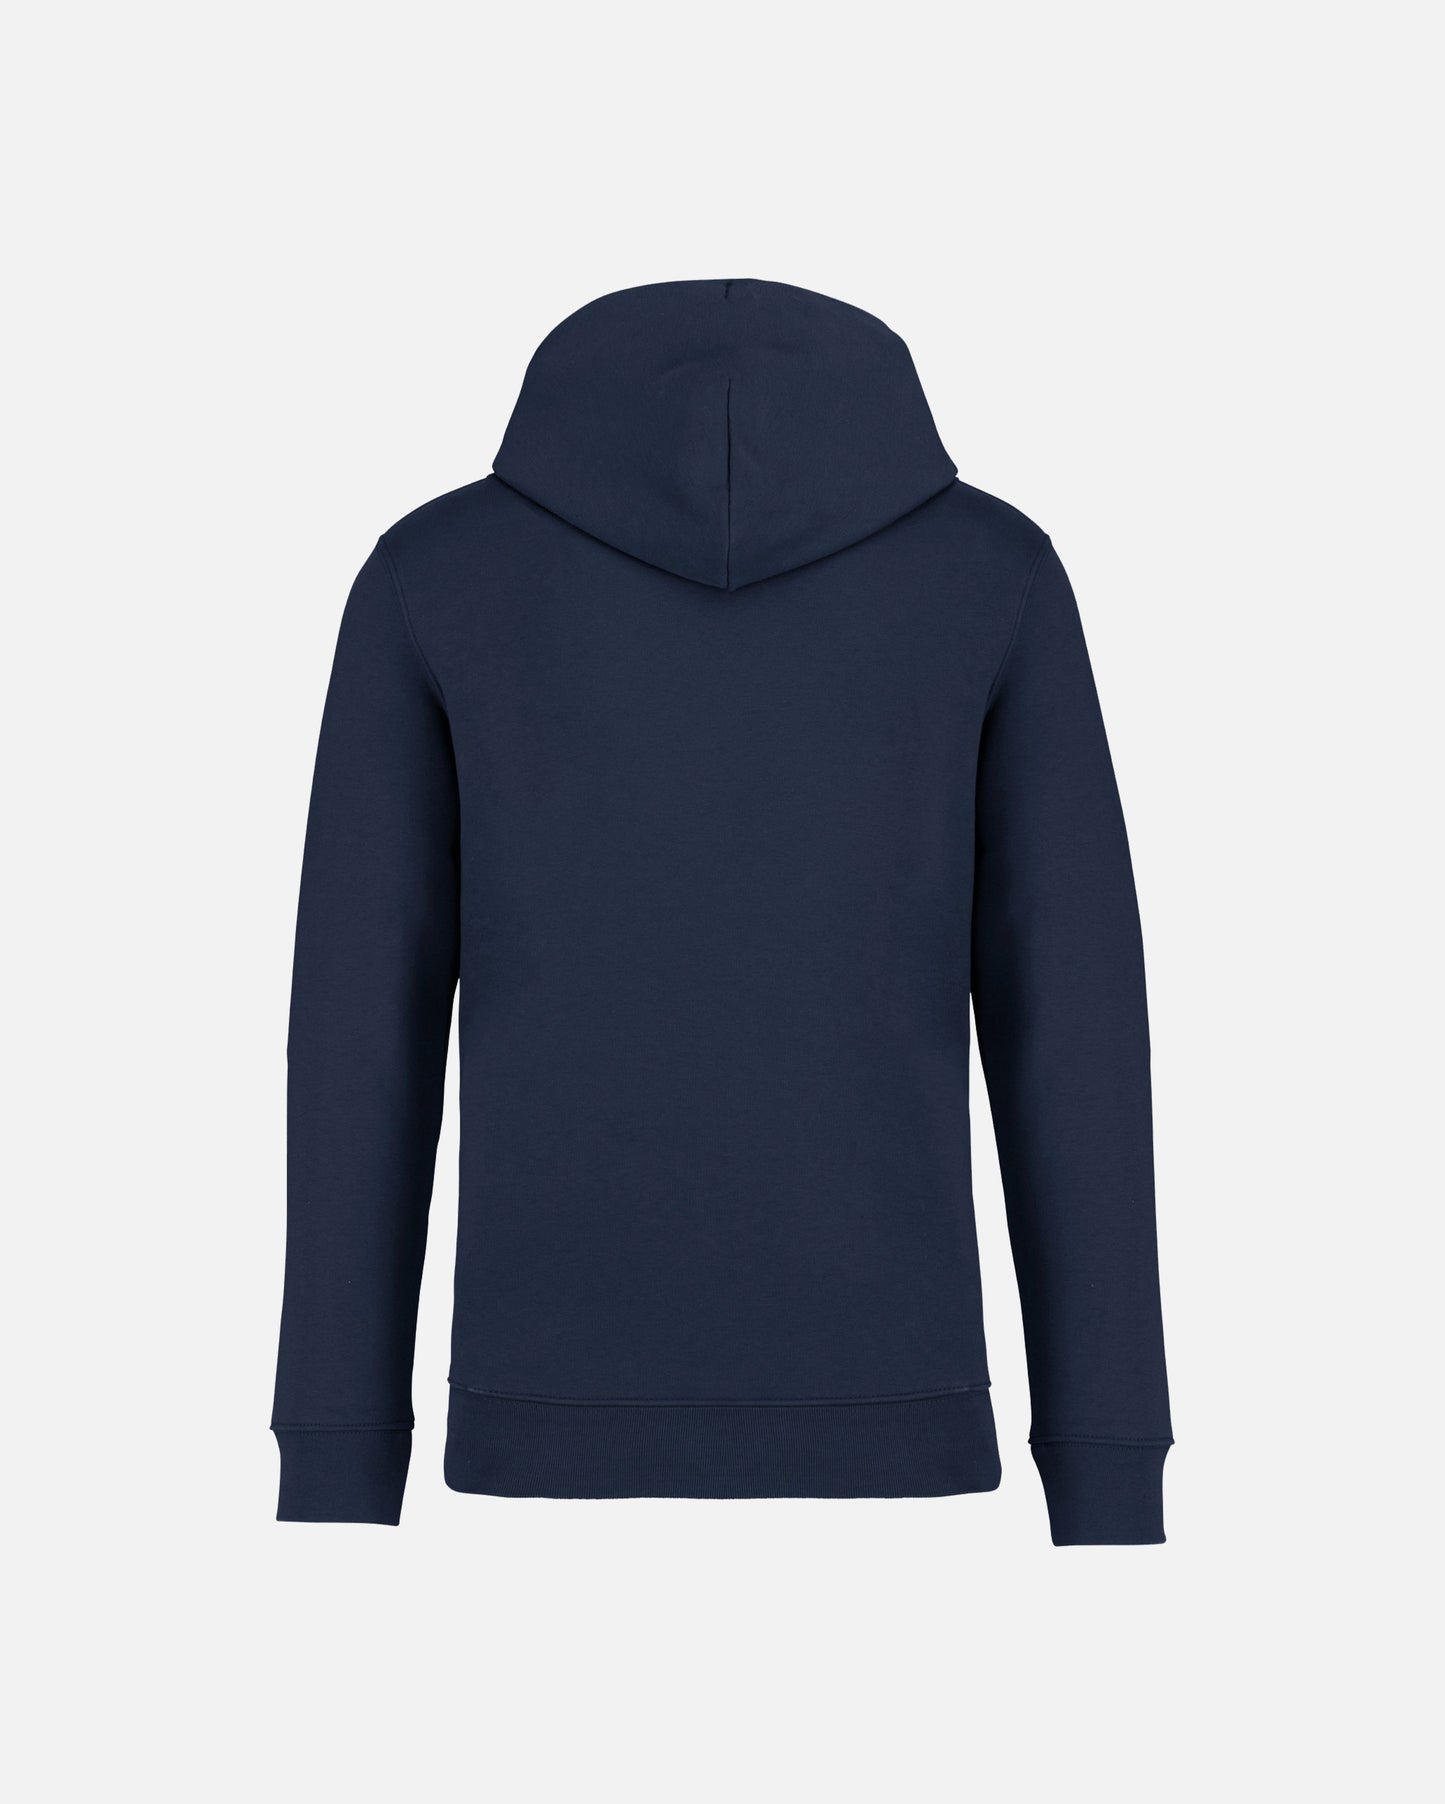 Navy Blue hoodie unisex |Unimi